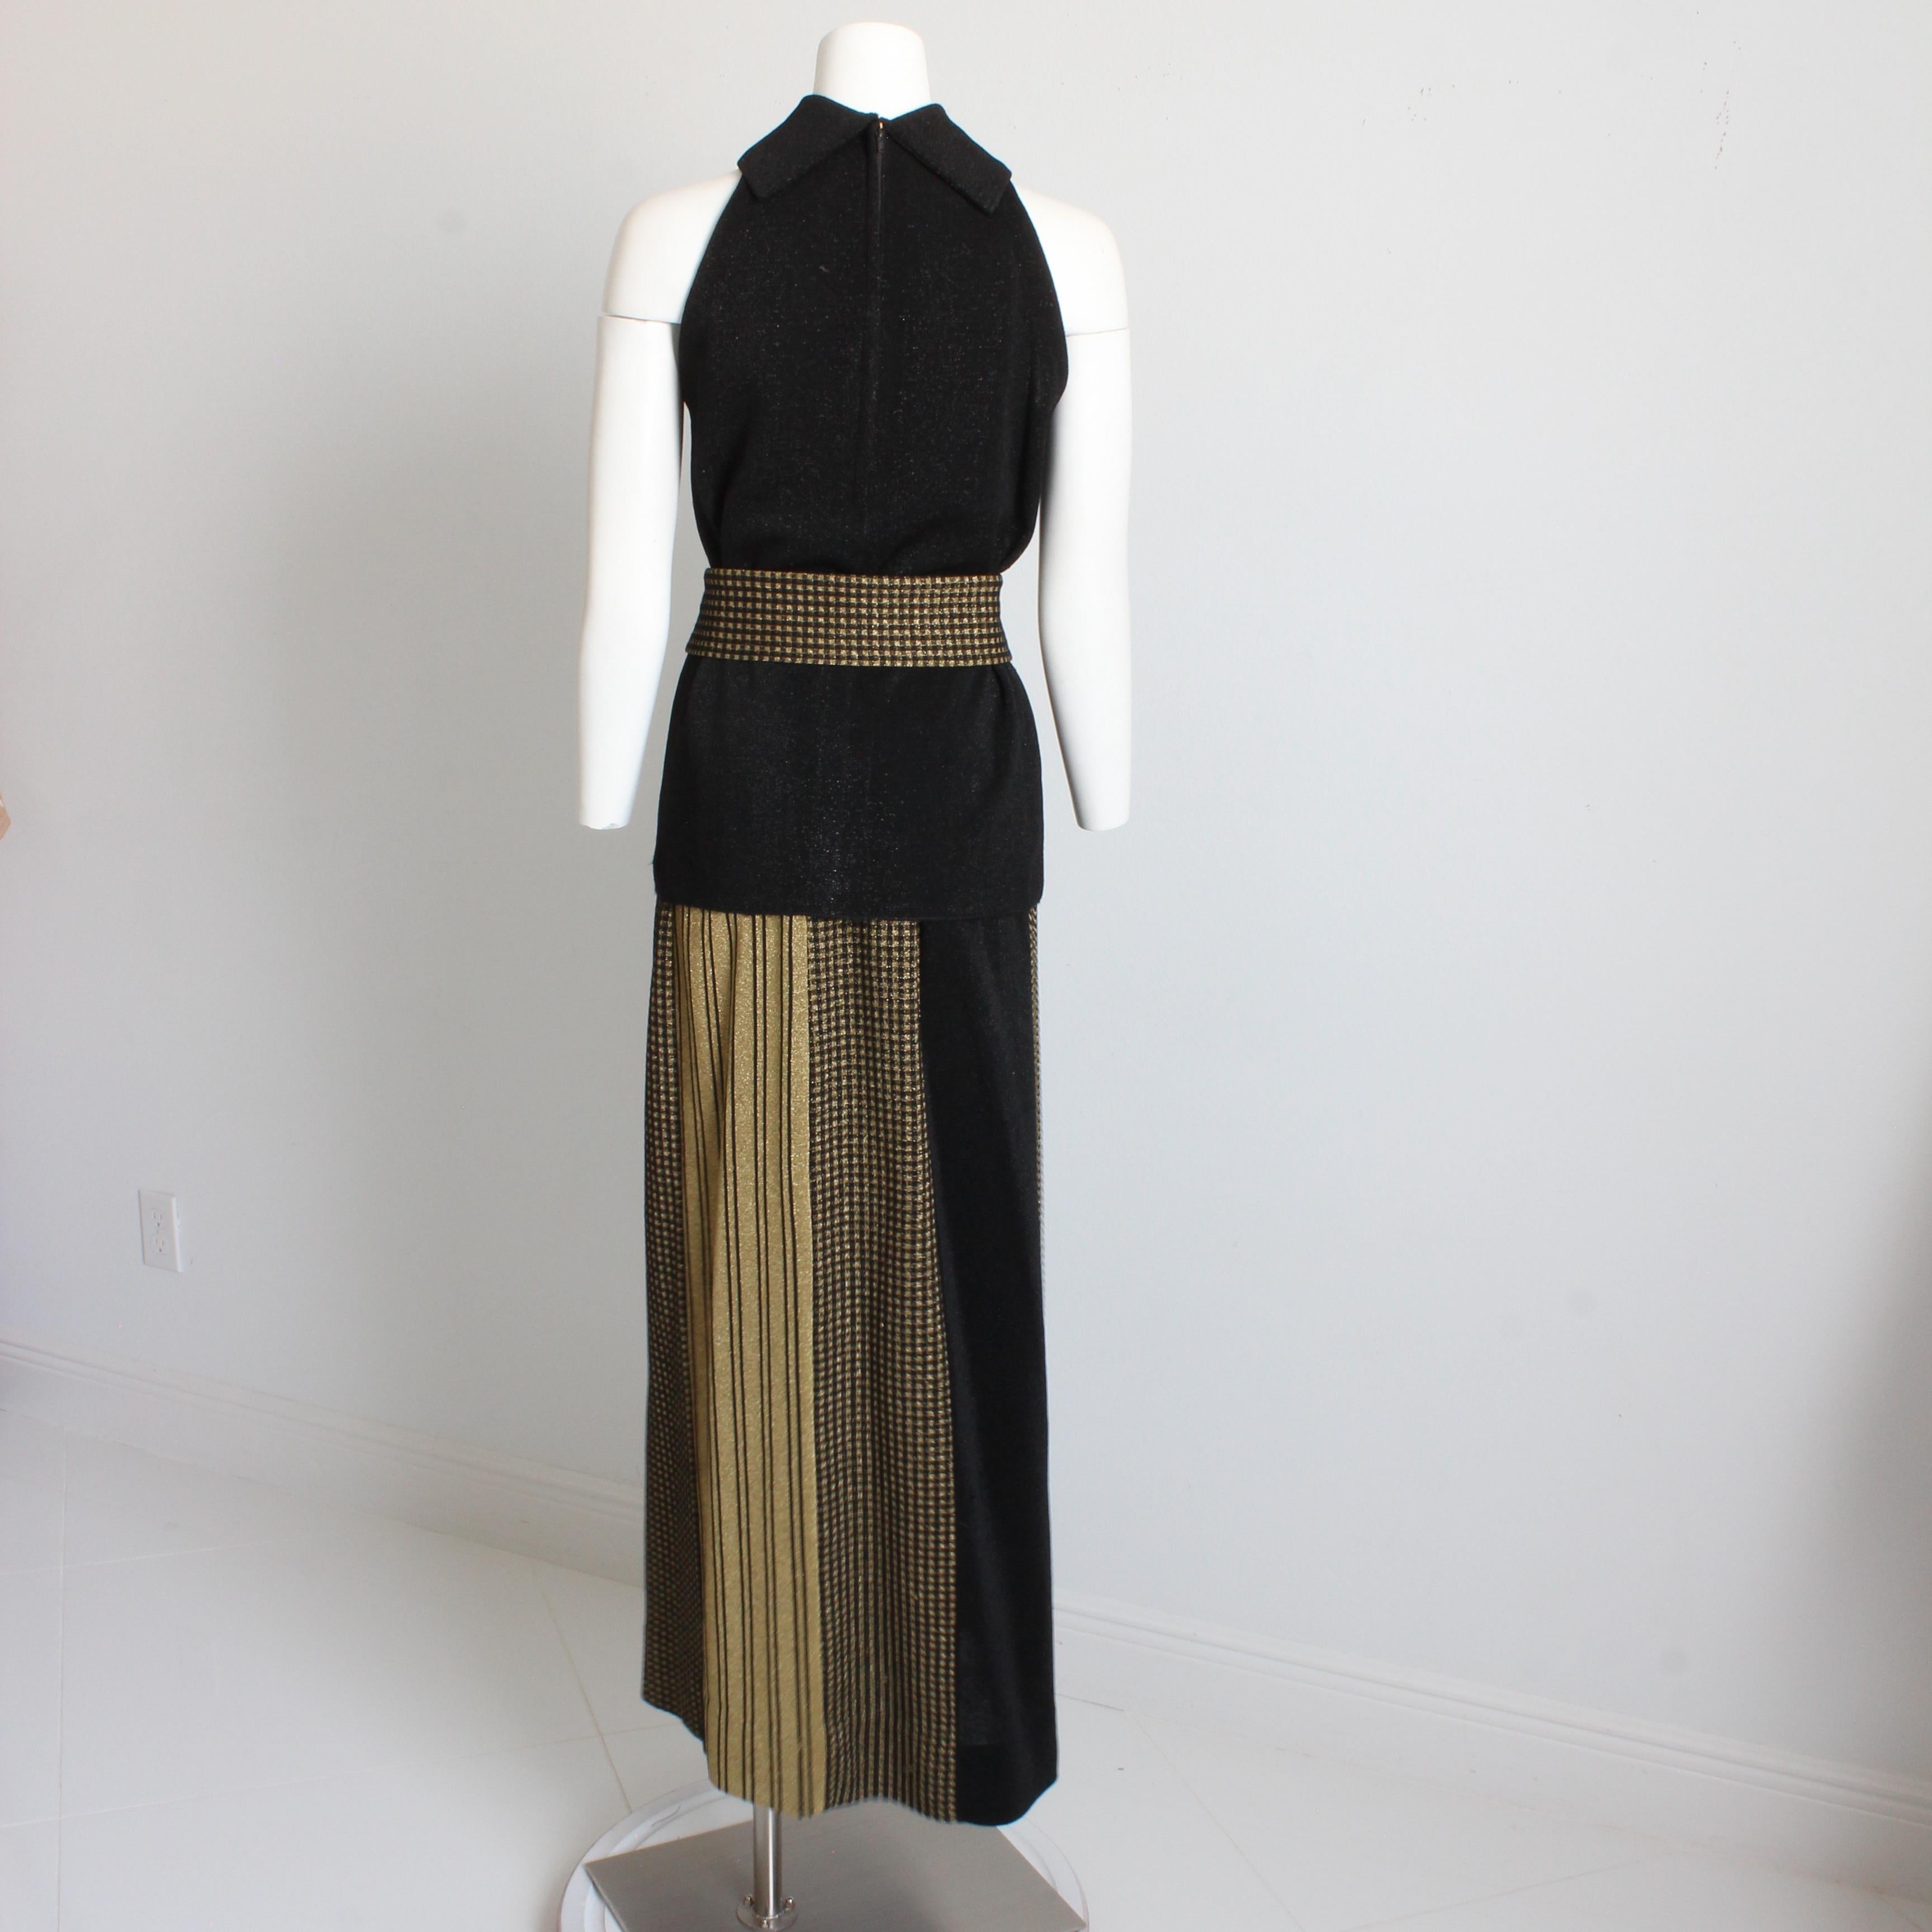 Rudi Gernreich 3pc Set Top Skirt and Sash Belt Black Gold Metallic Knit Suit 70s For Sale 5